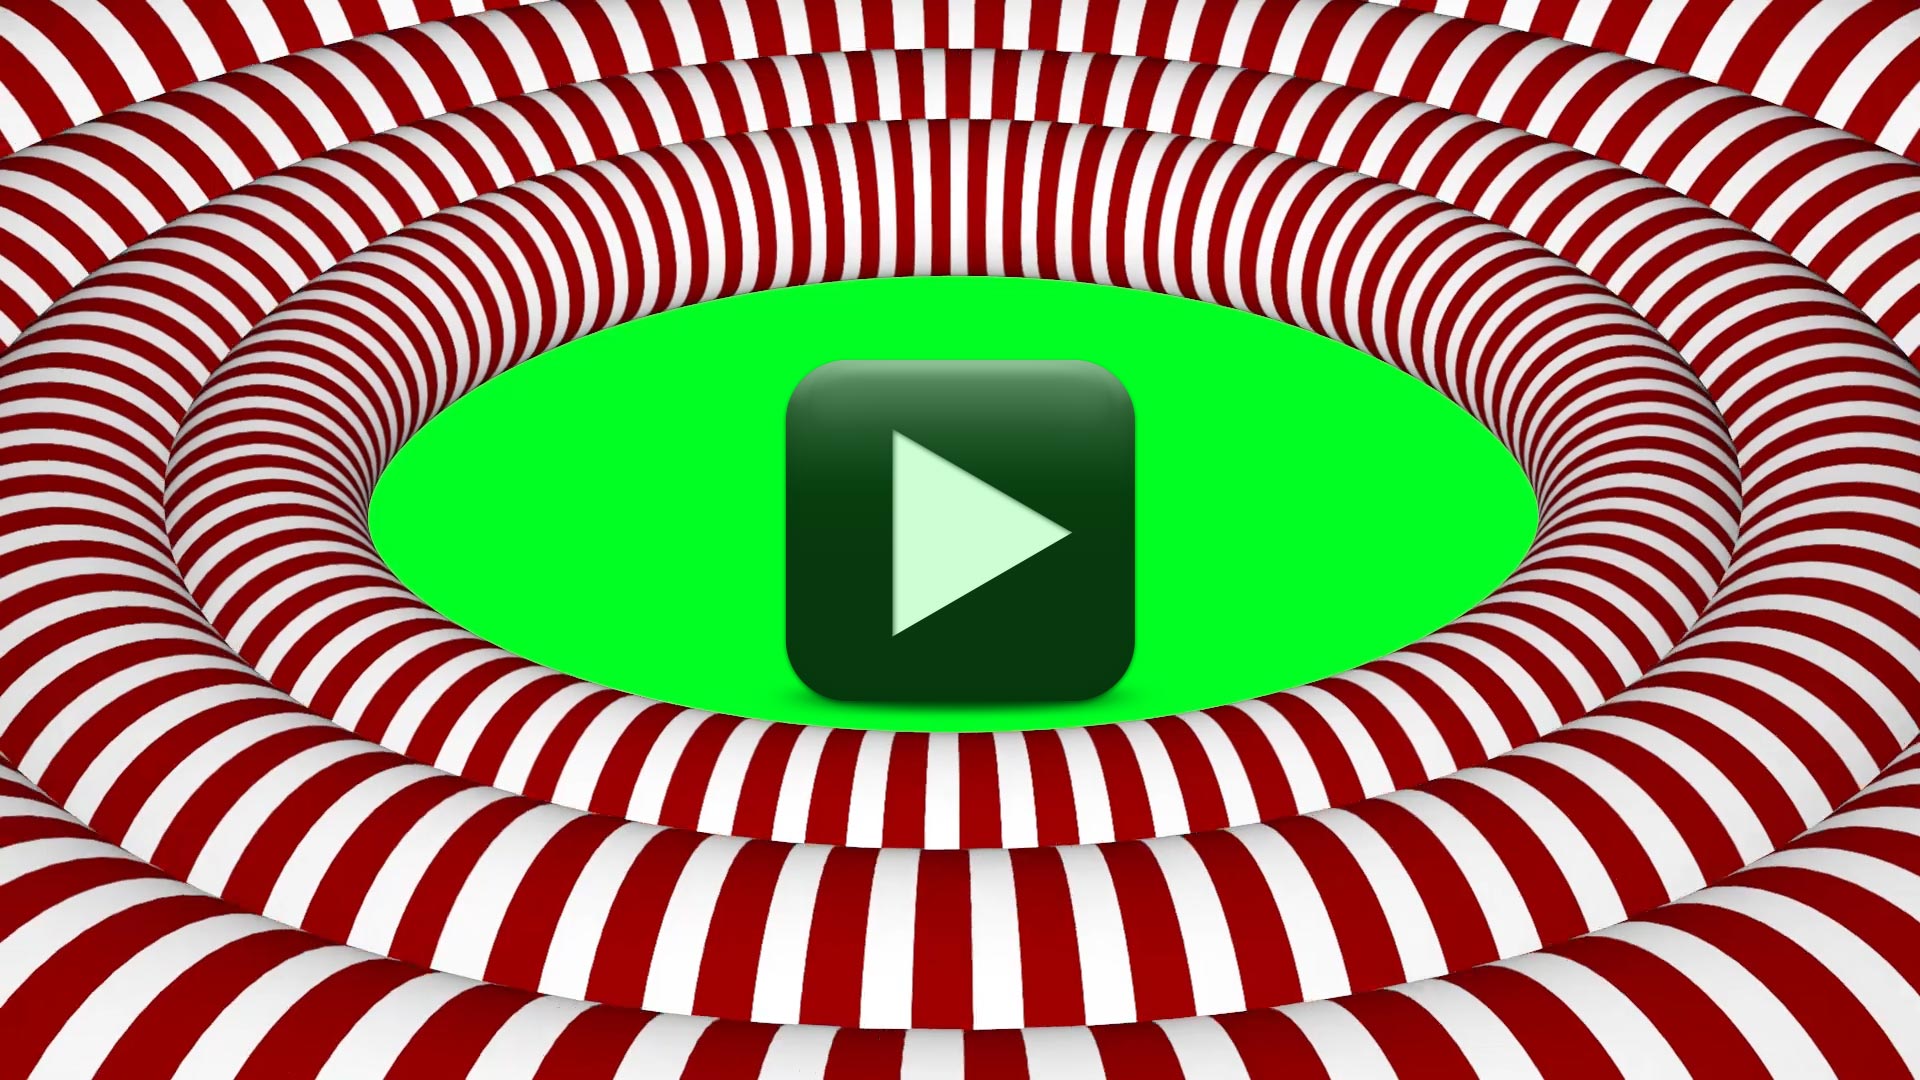 Motion Wedding Frame Video Circles Hypnotic Animated Background